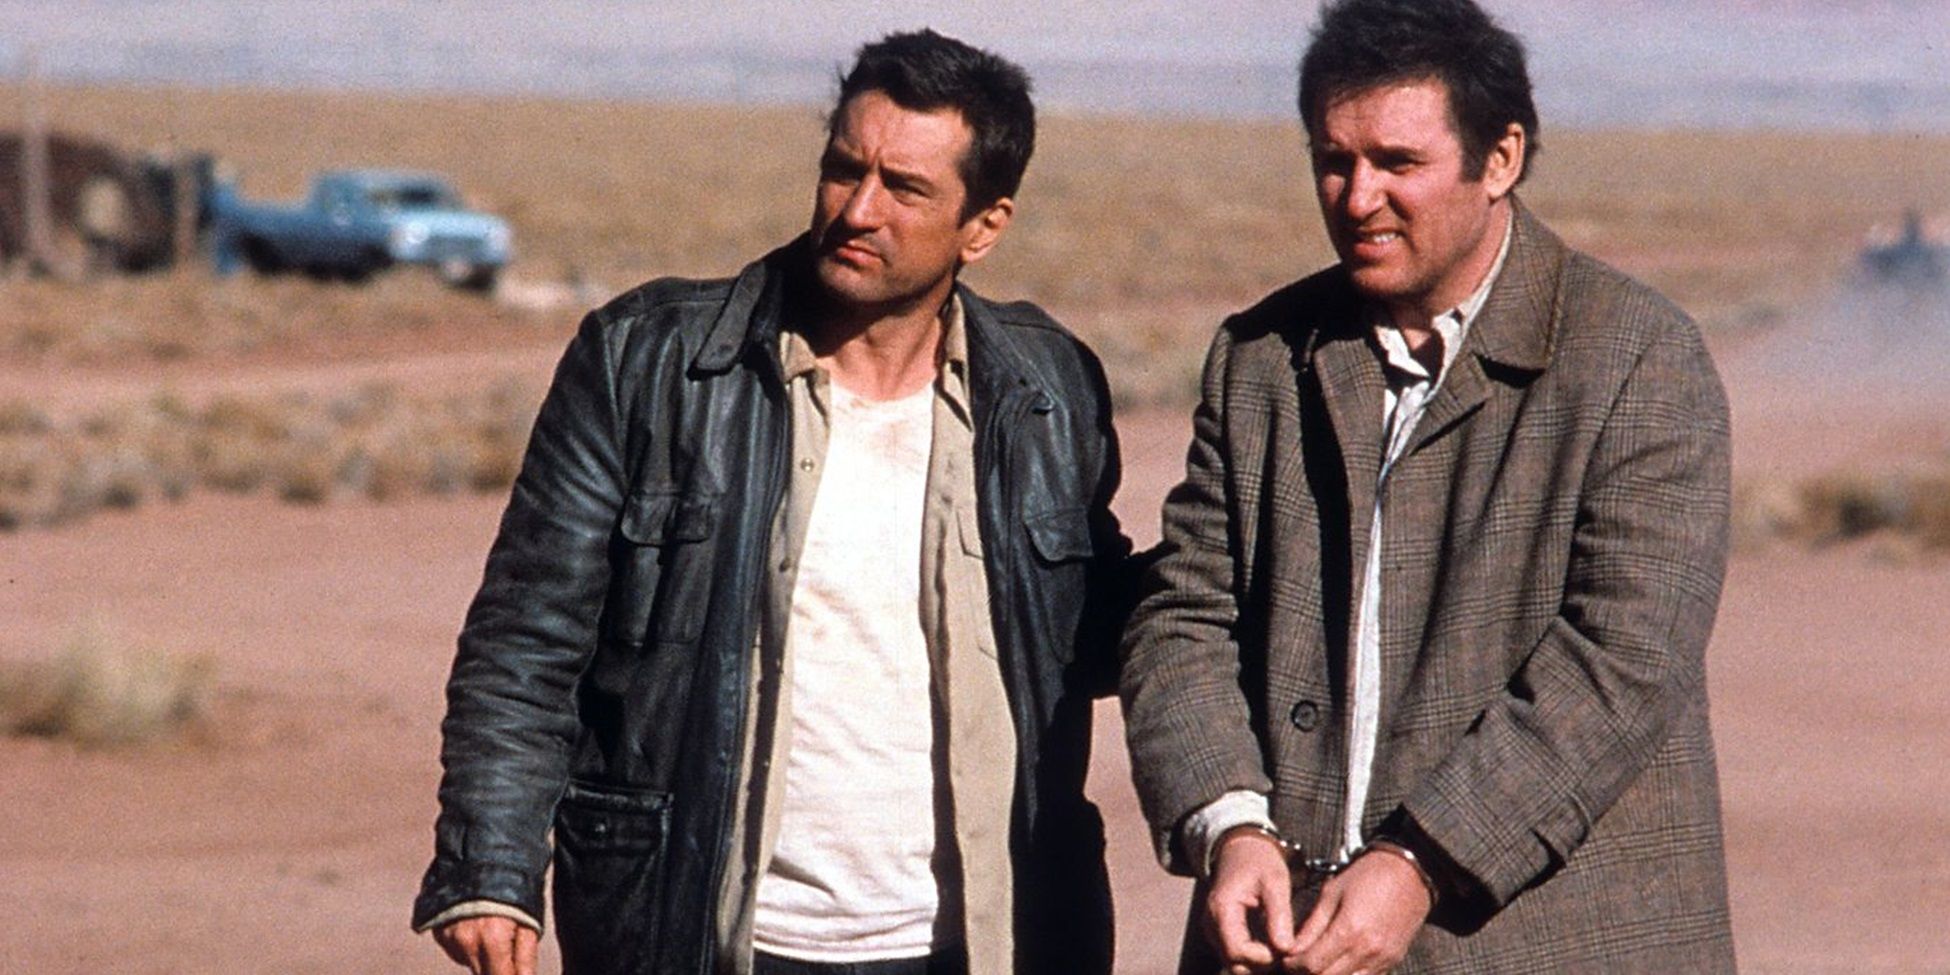 Robert De Niro with Charles Grodin in handcuffs in Midnight Run